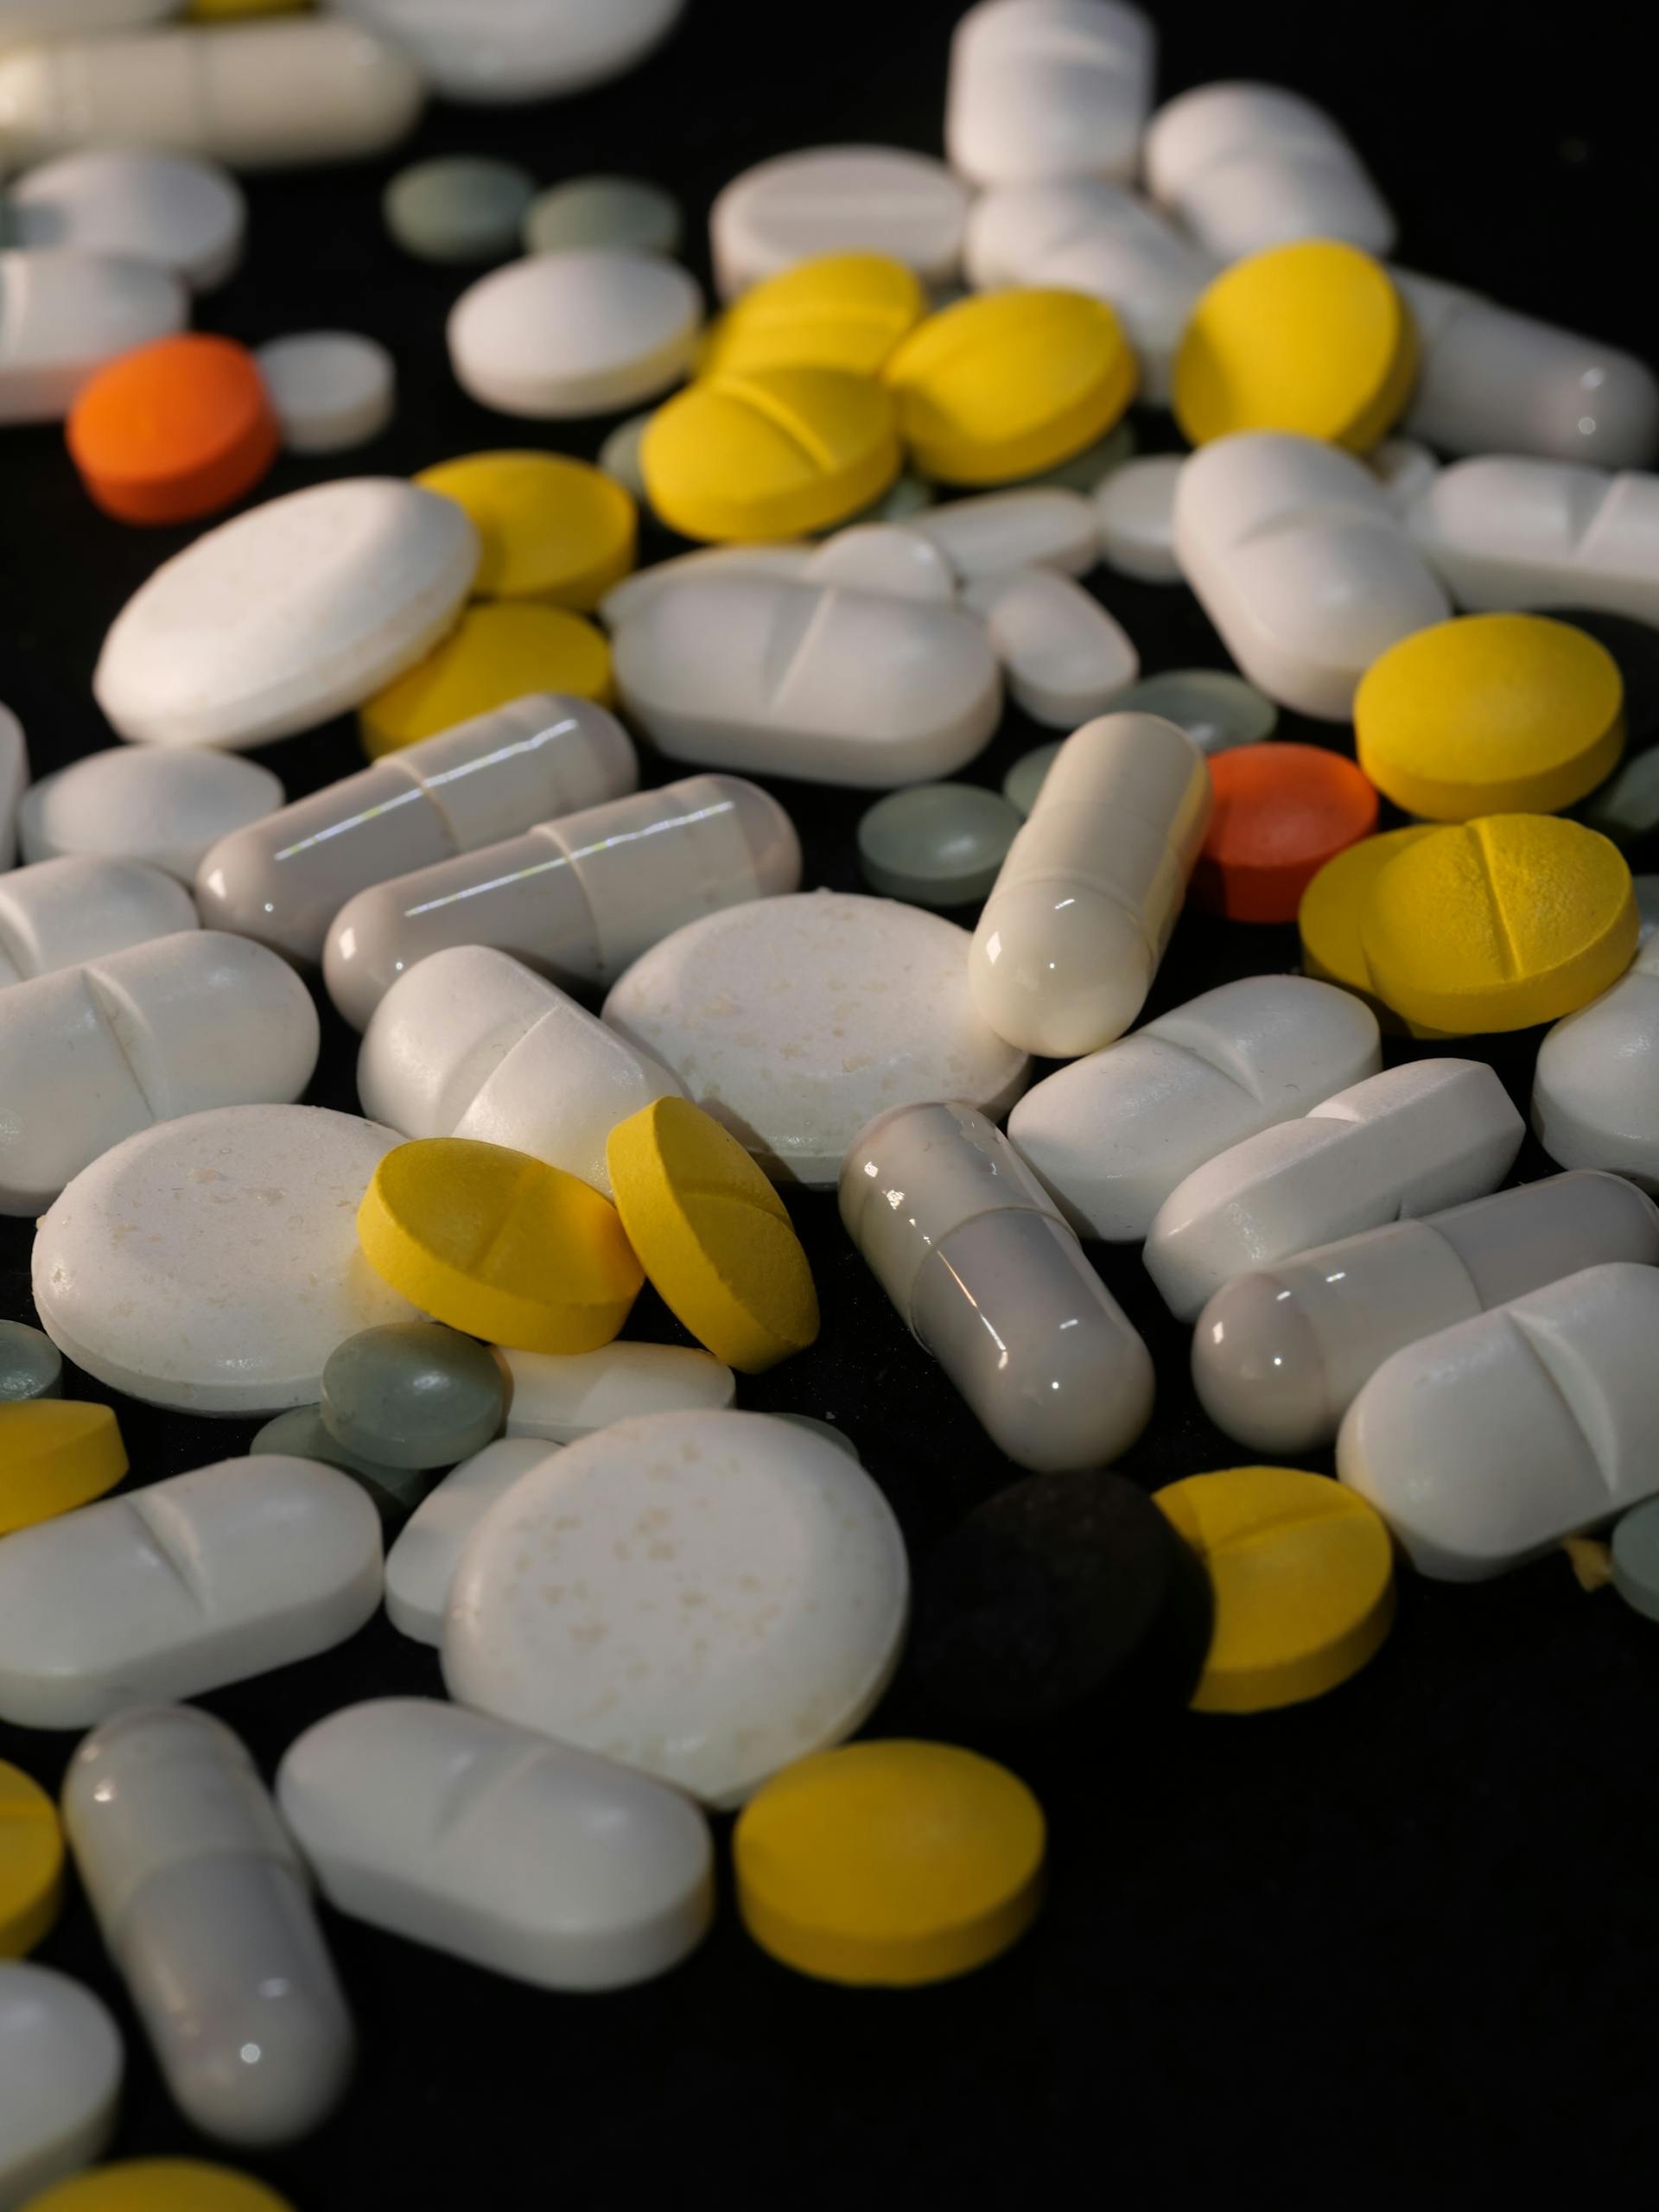 An array of medication | Source: Pexels